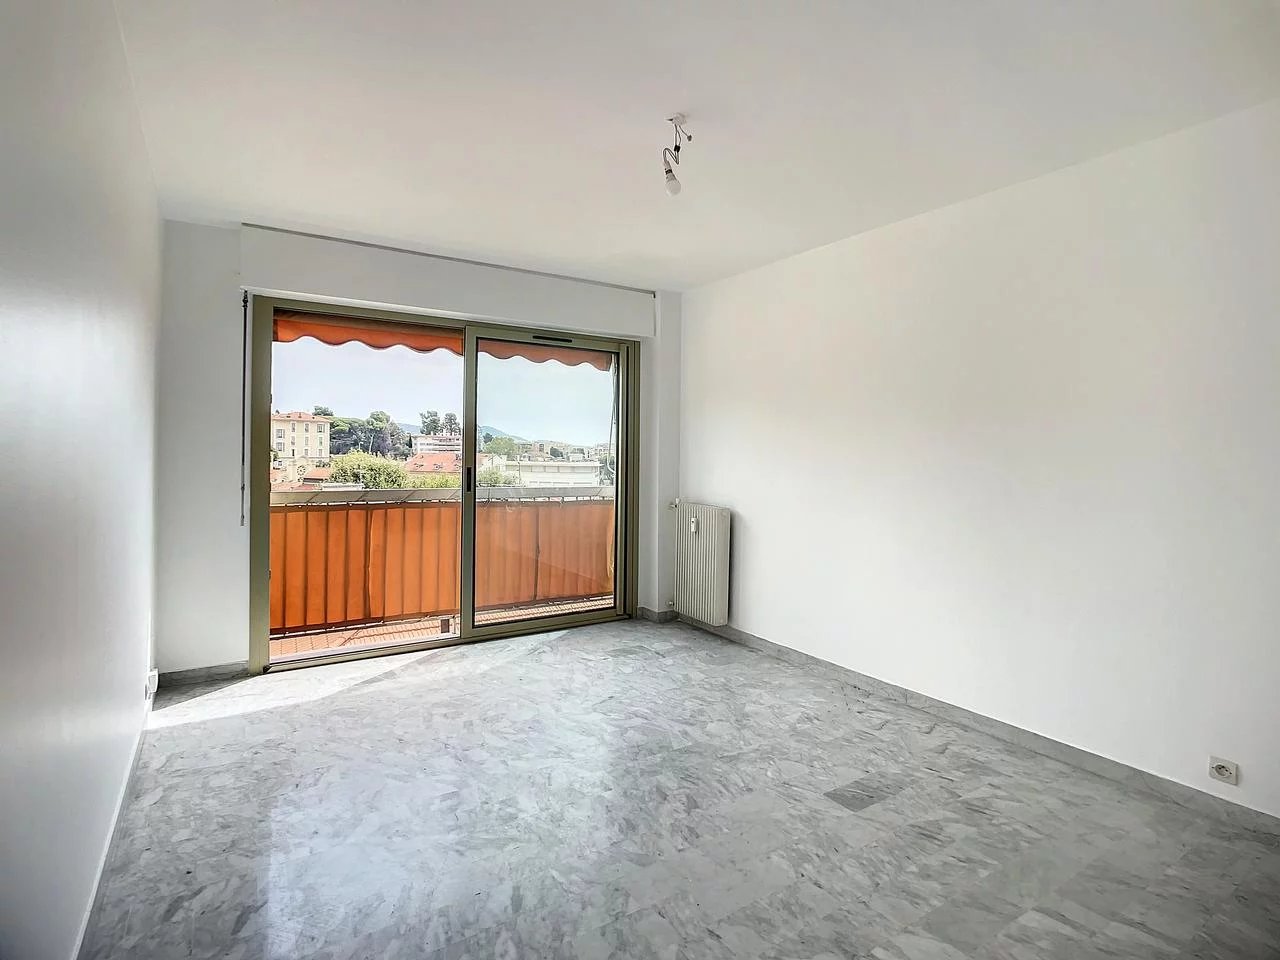 Appartement  2 Locali 43.6m2  In vendita   199 000 €